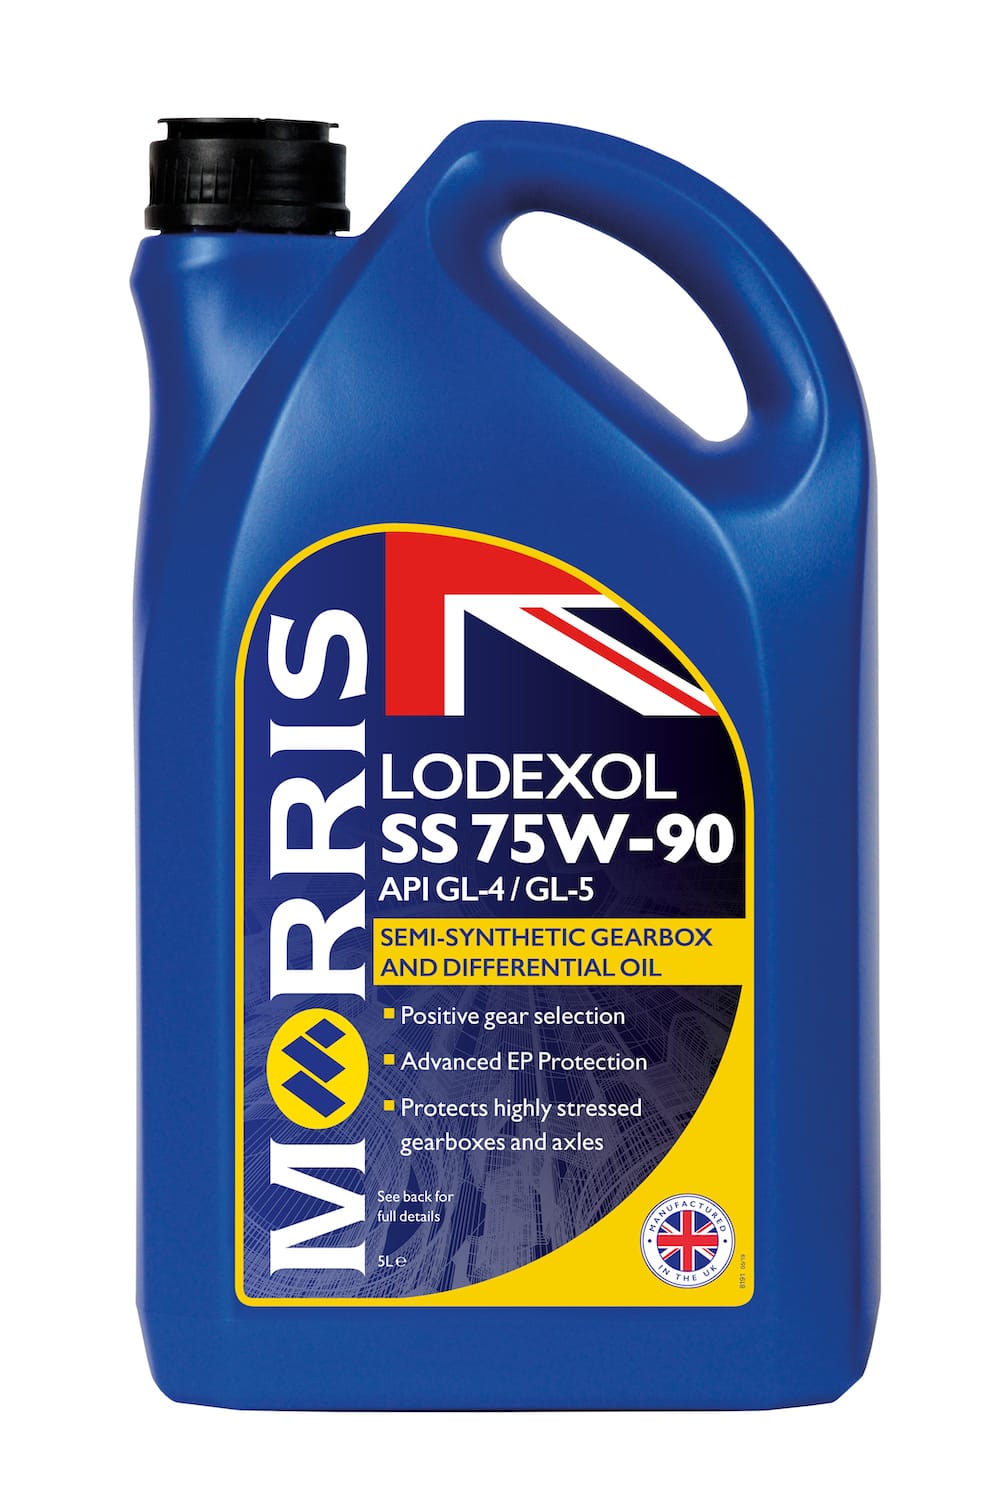 Lodexol SS 75W-90 Gear Oil